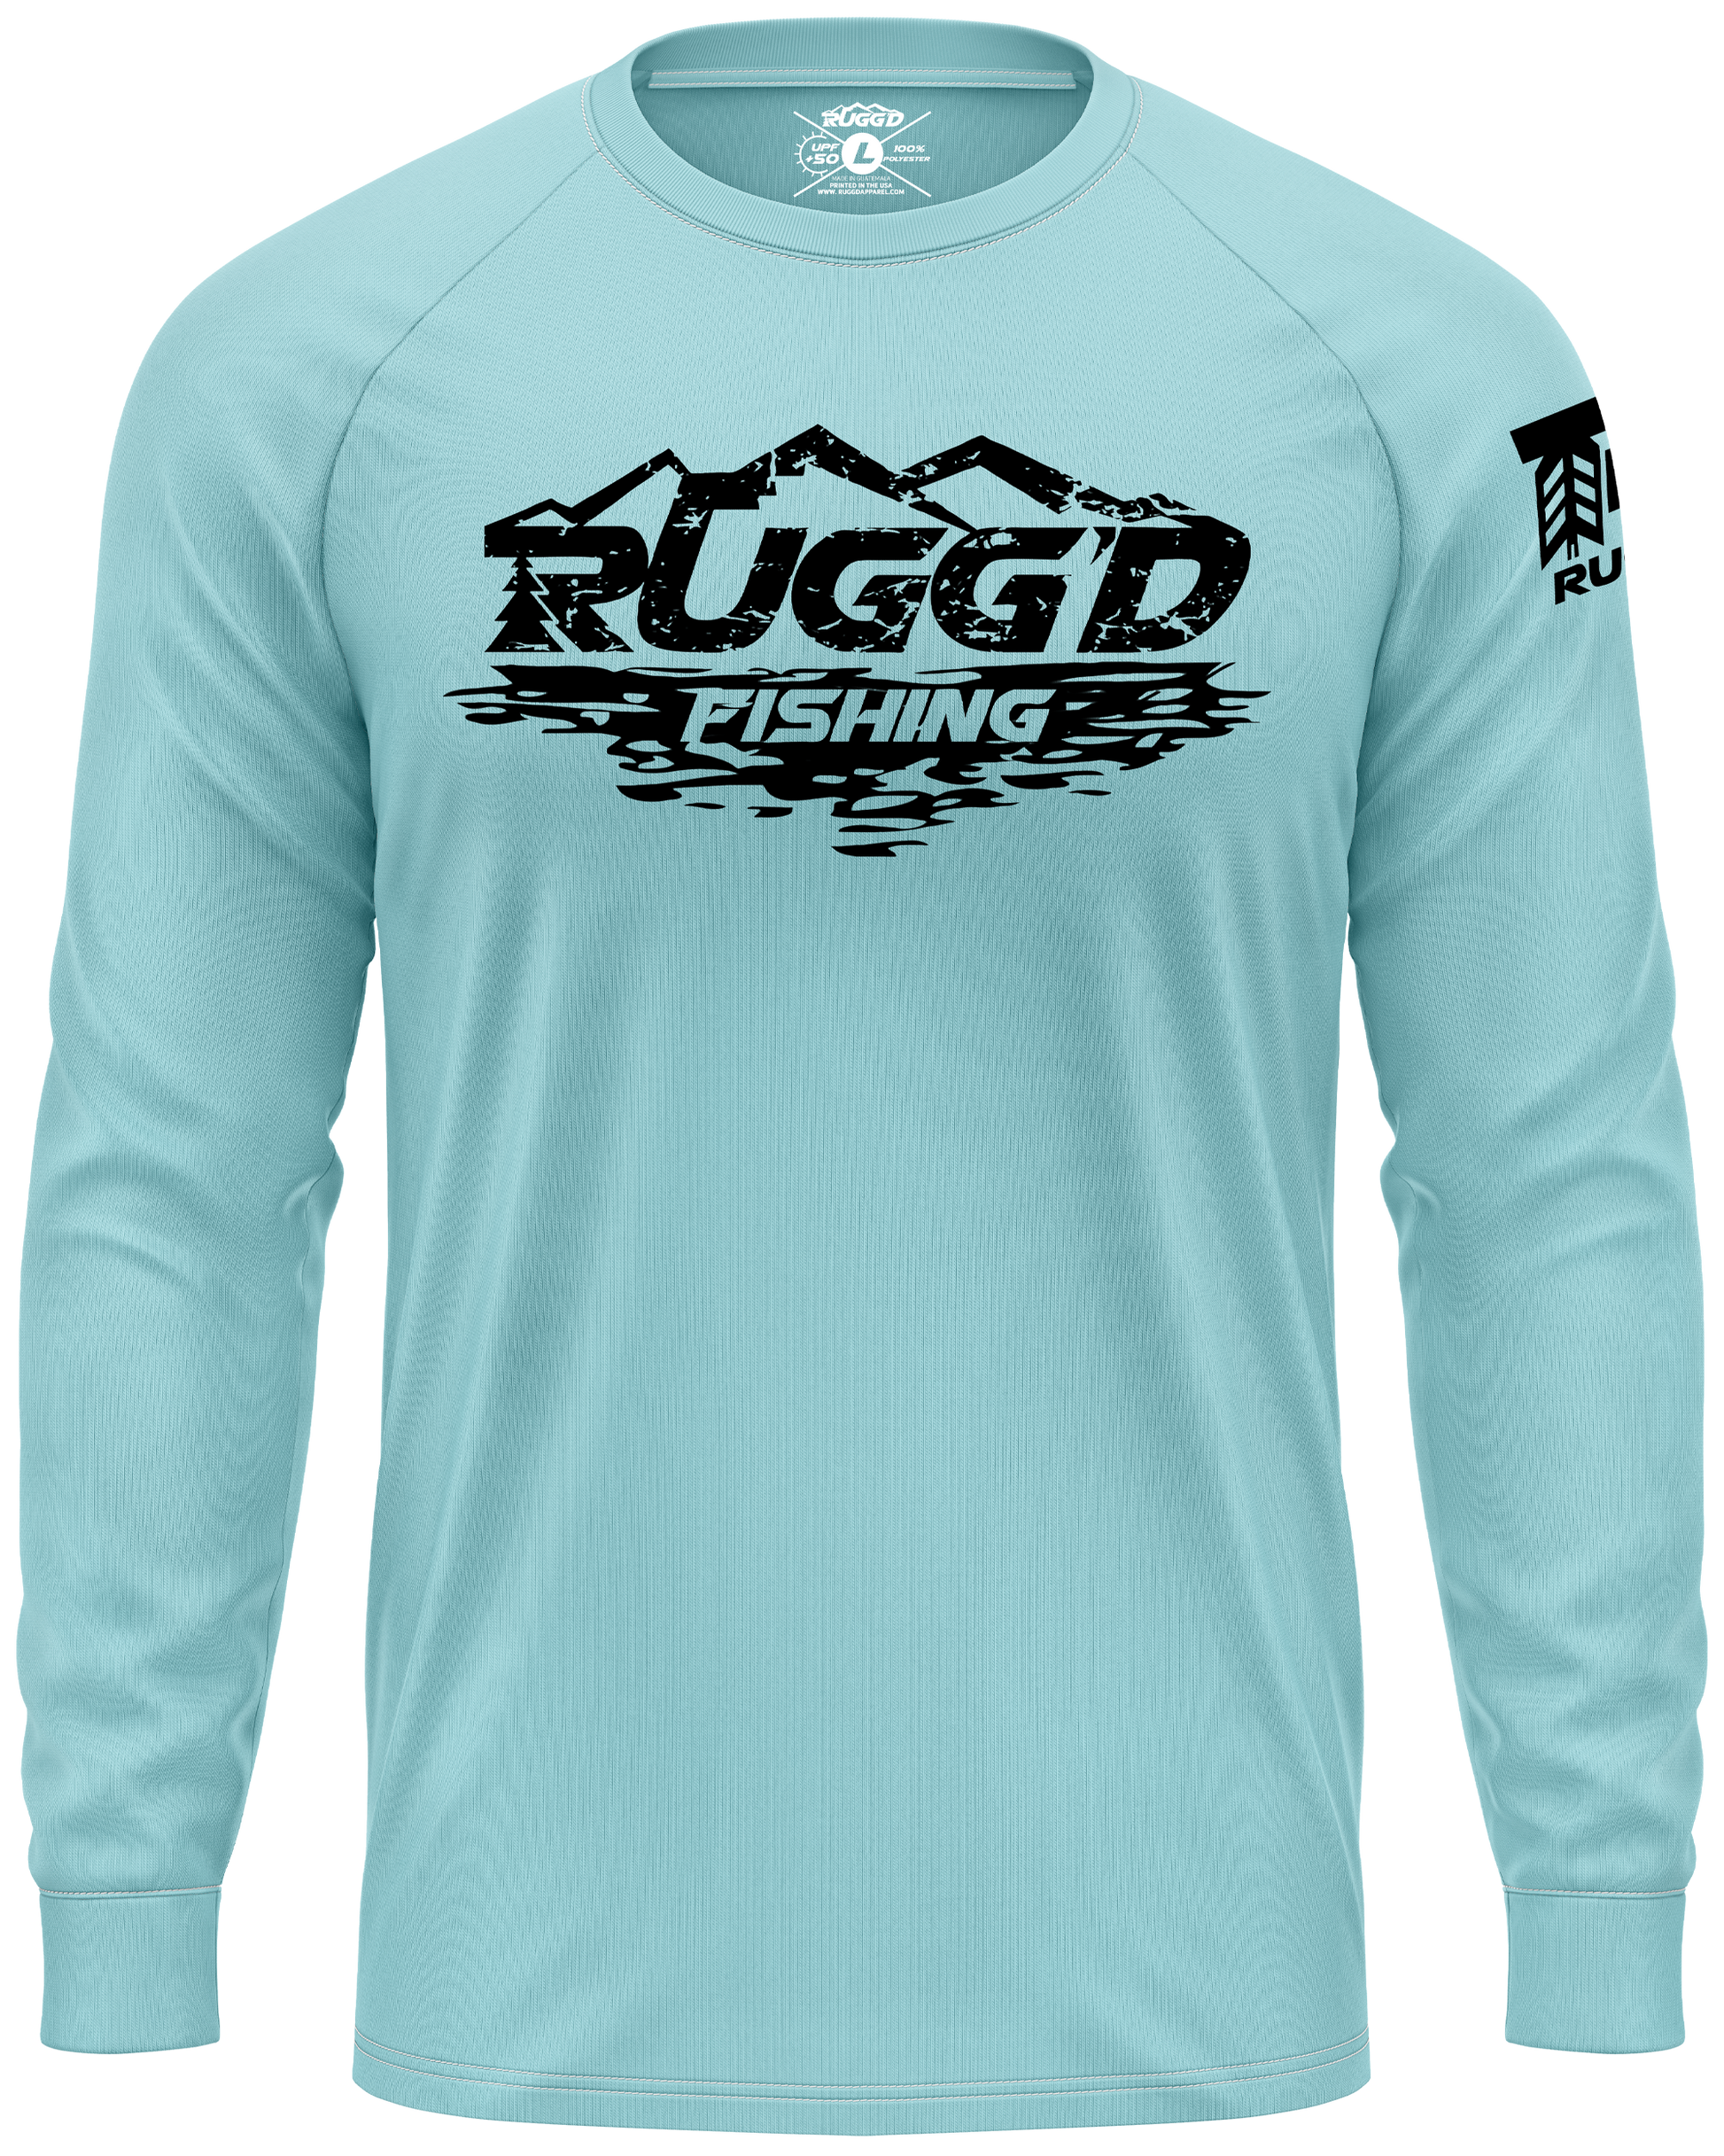 RUGG'D Waters Performance Shirt Medium